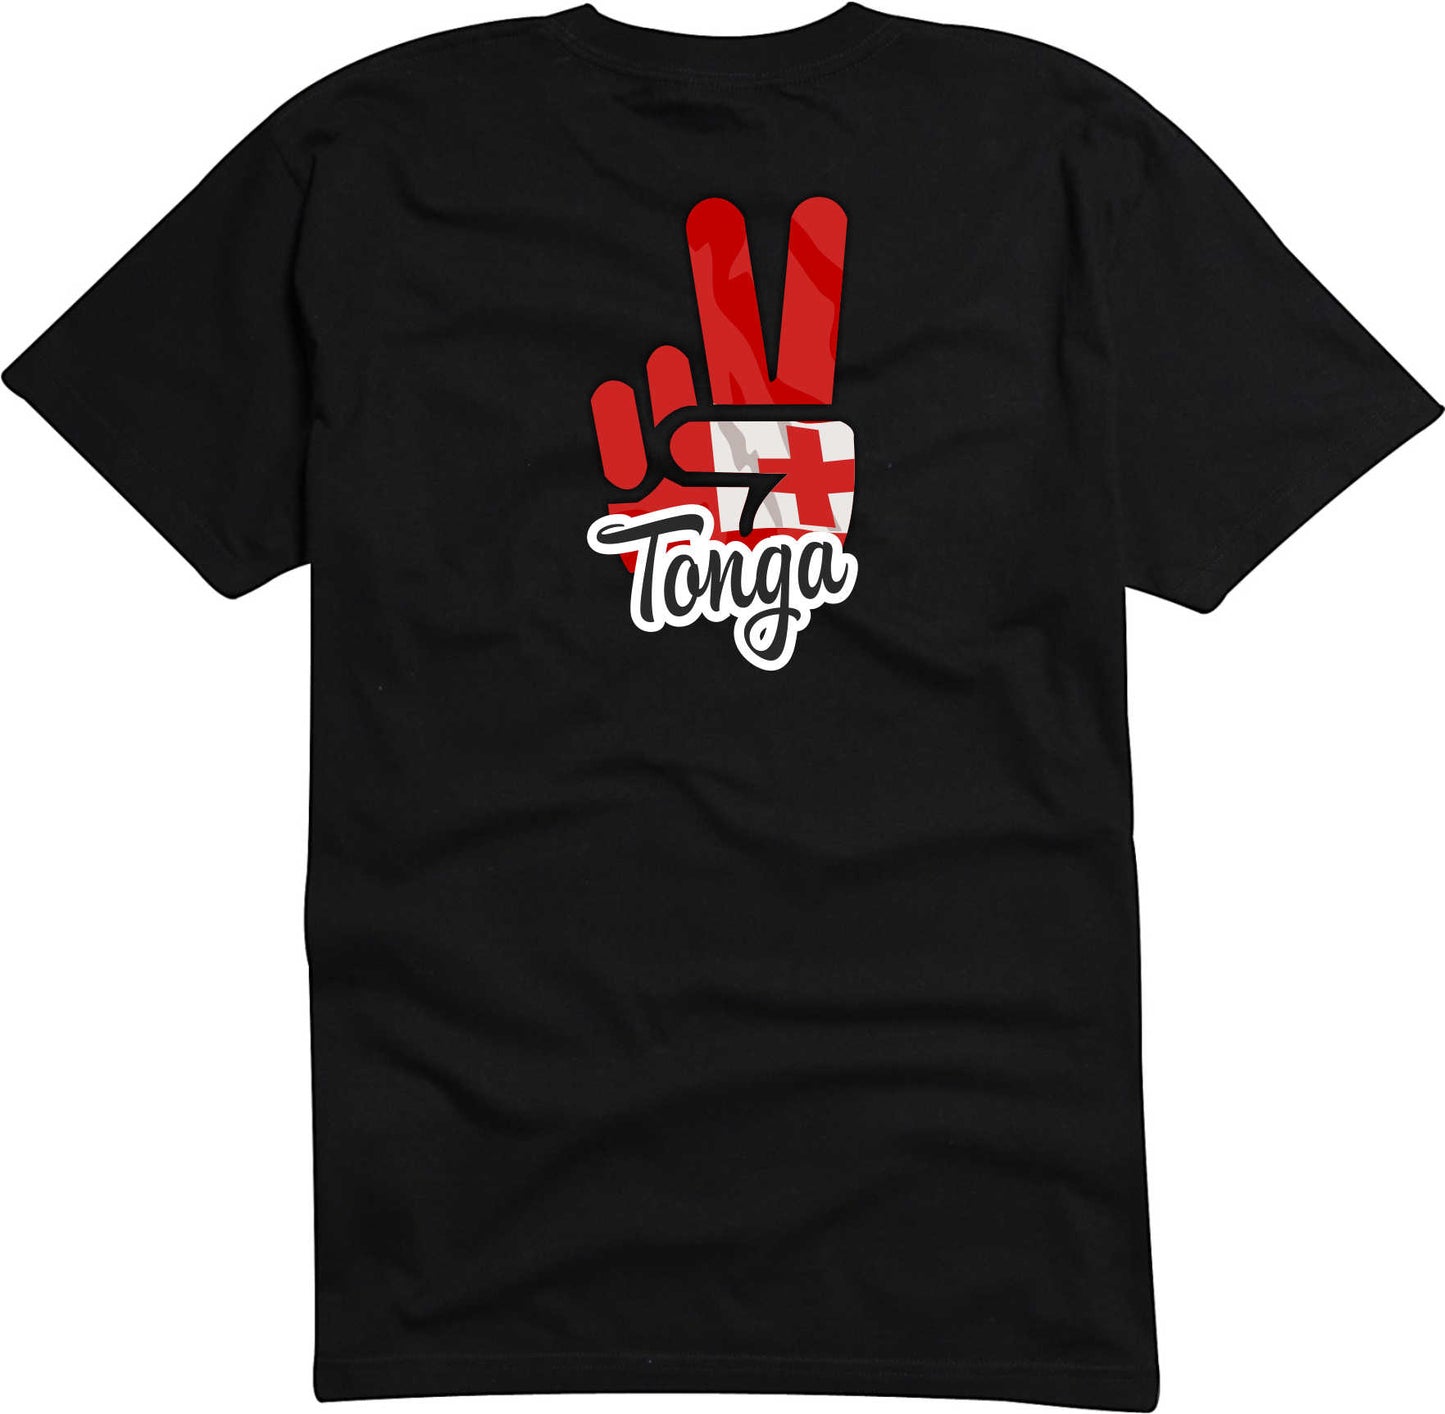 T-Shirt Herren - Victory - Flagge / Fahne - Tonga - Sieg